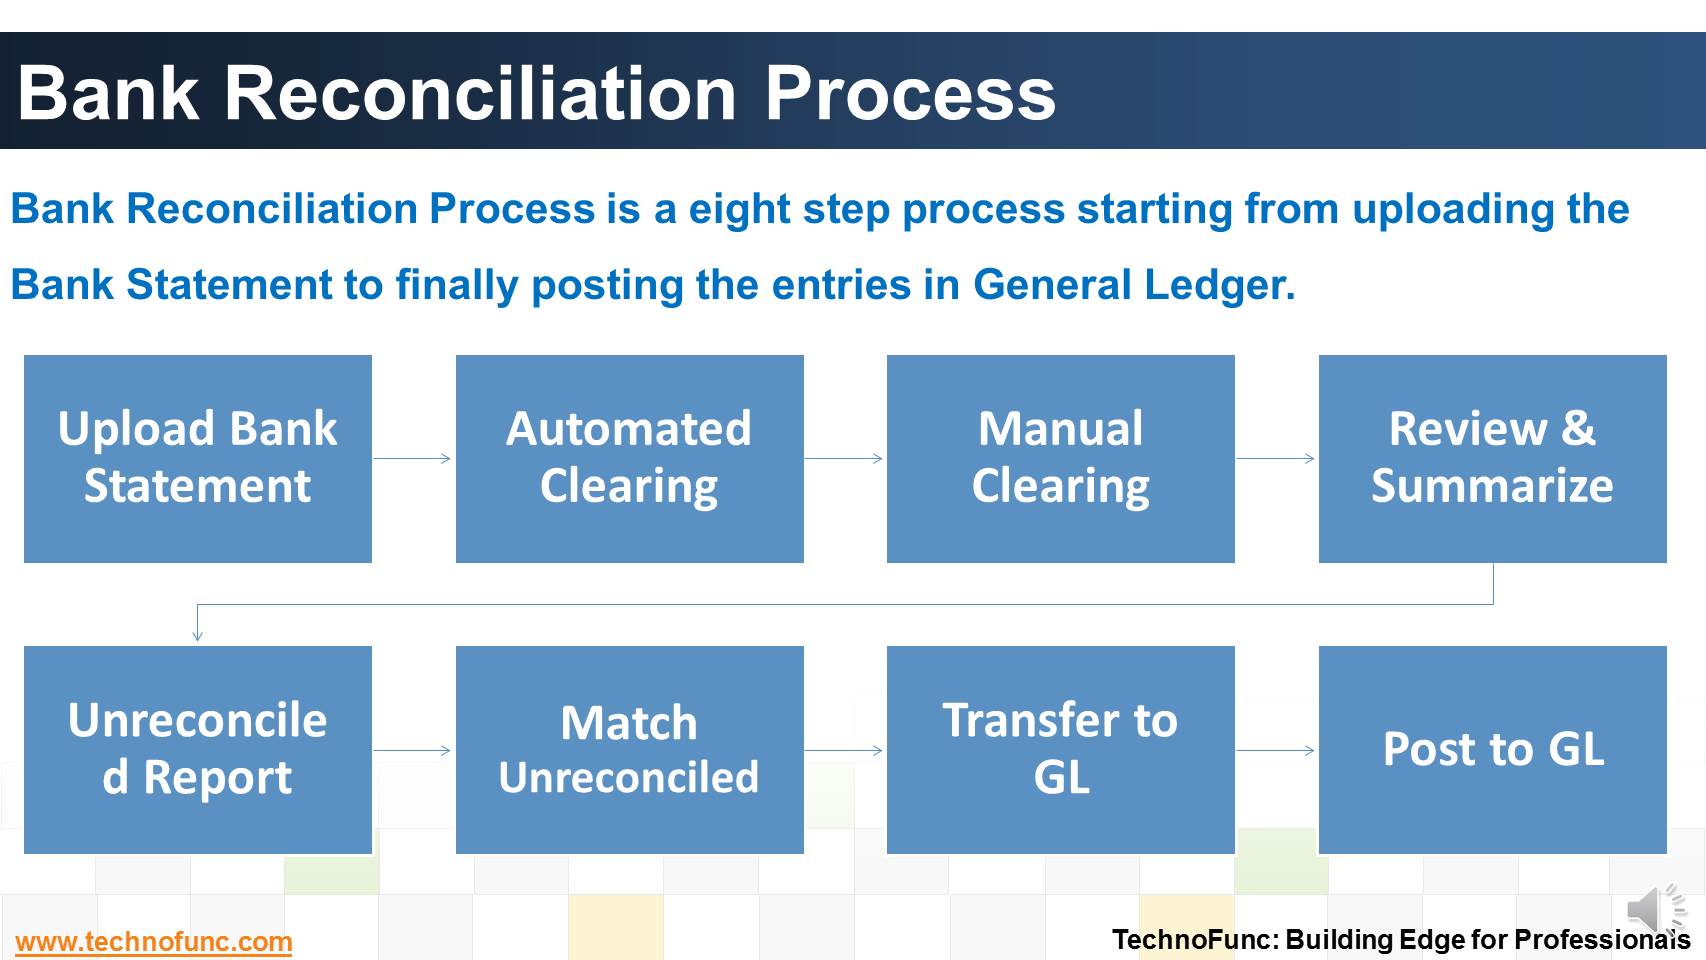 Complete Bank Reconciliation Process